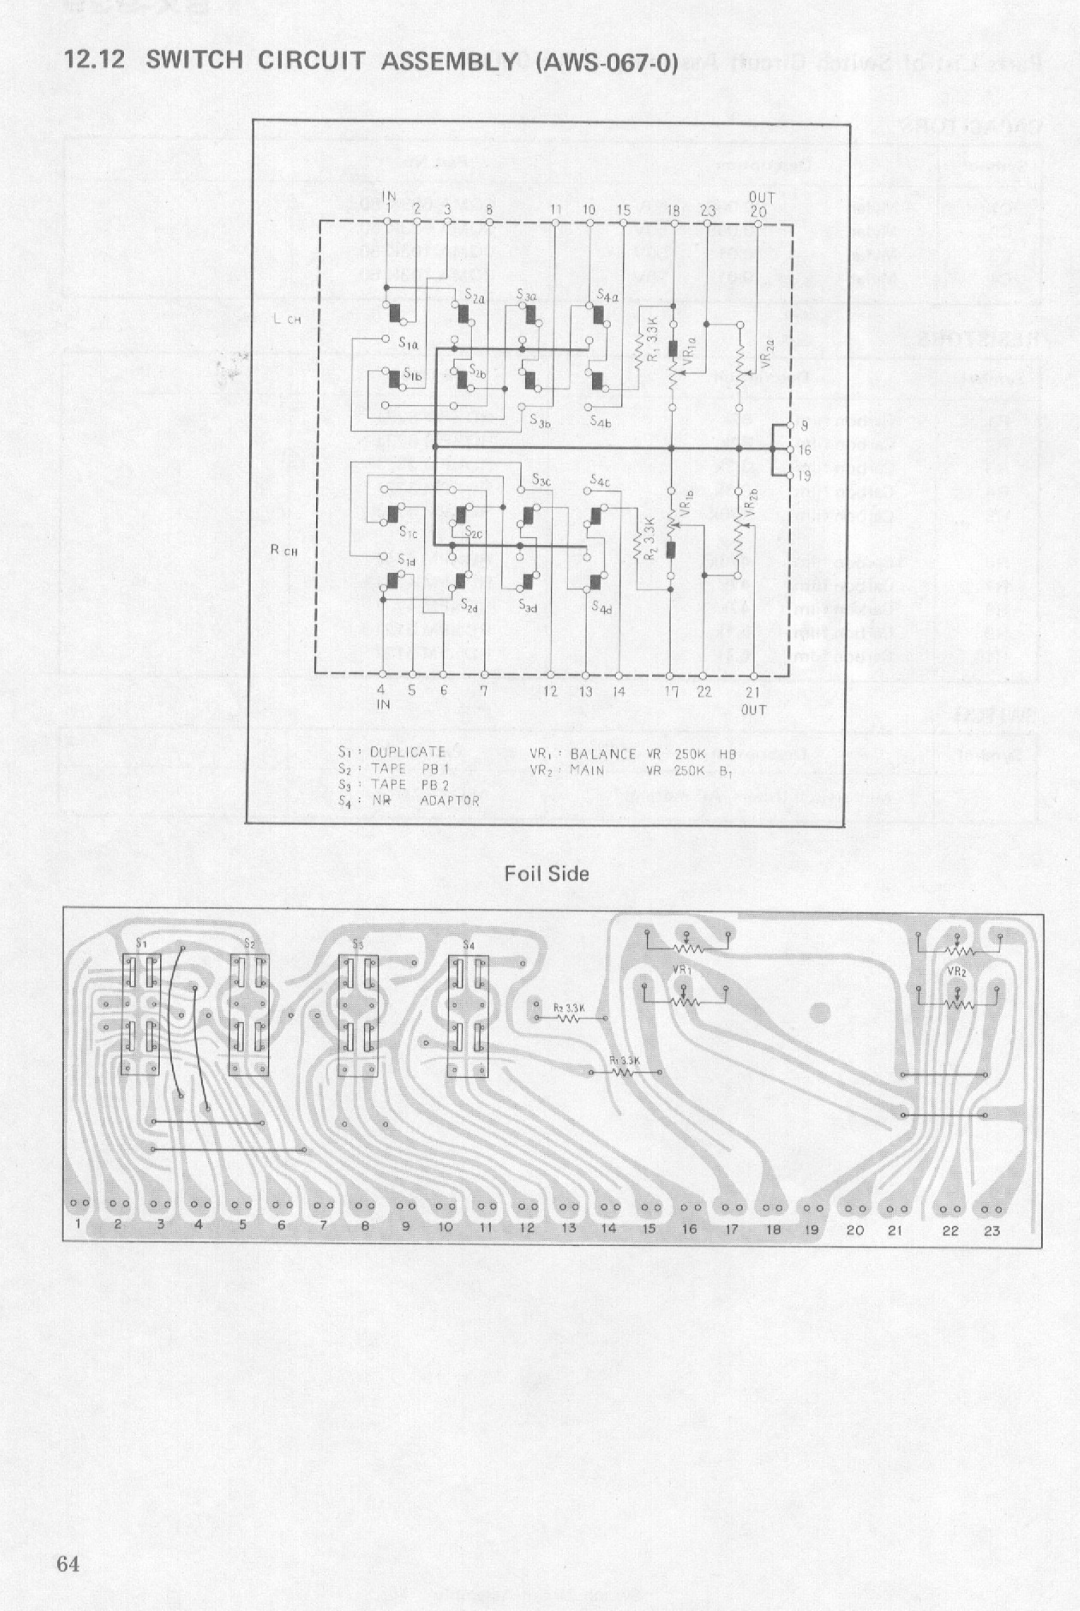 Pioneer sx-939 manual 